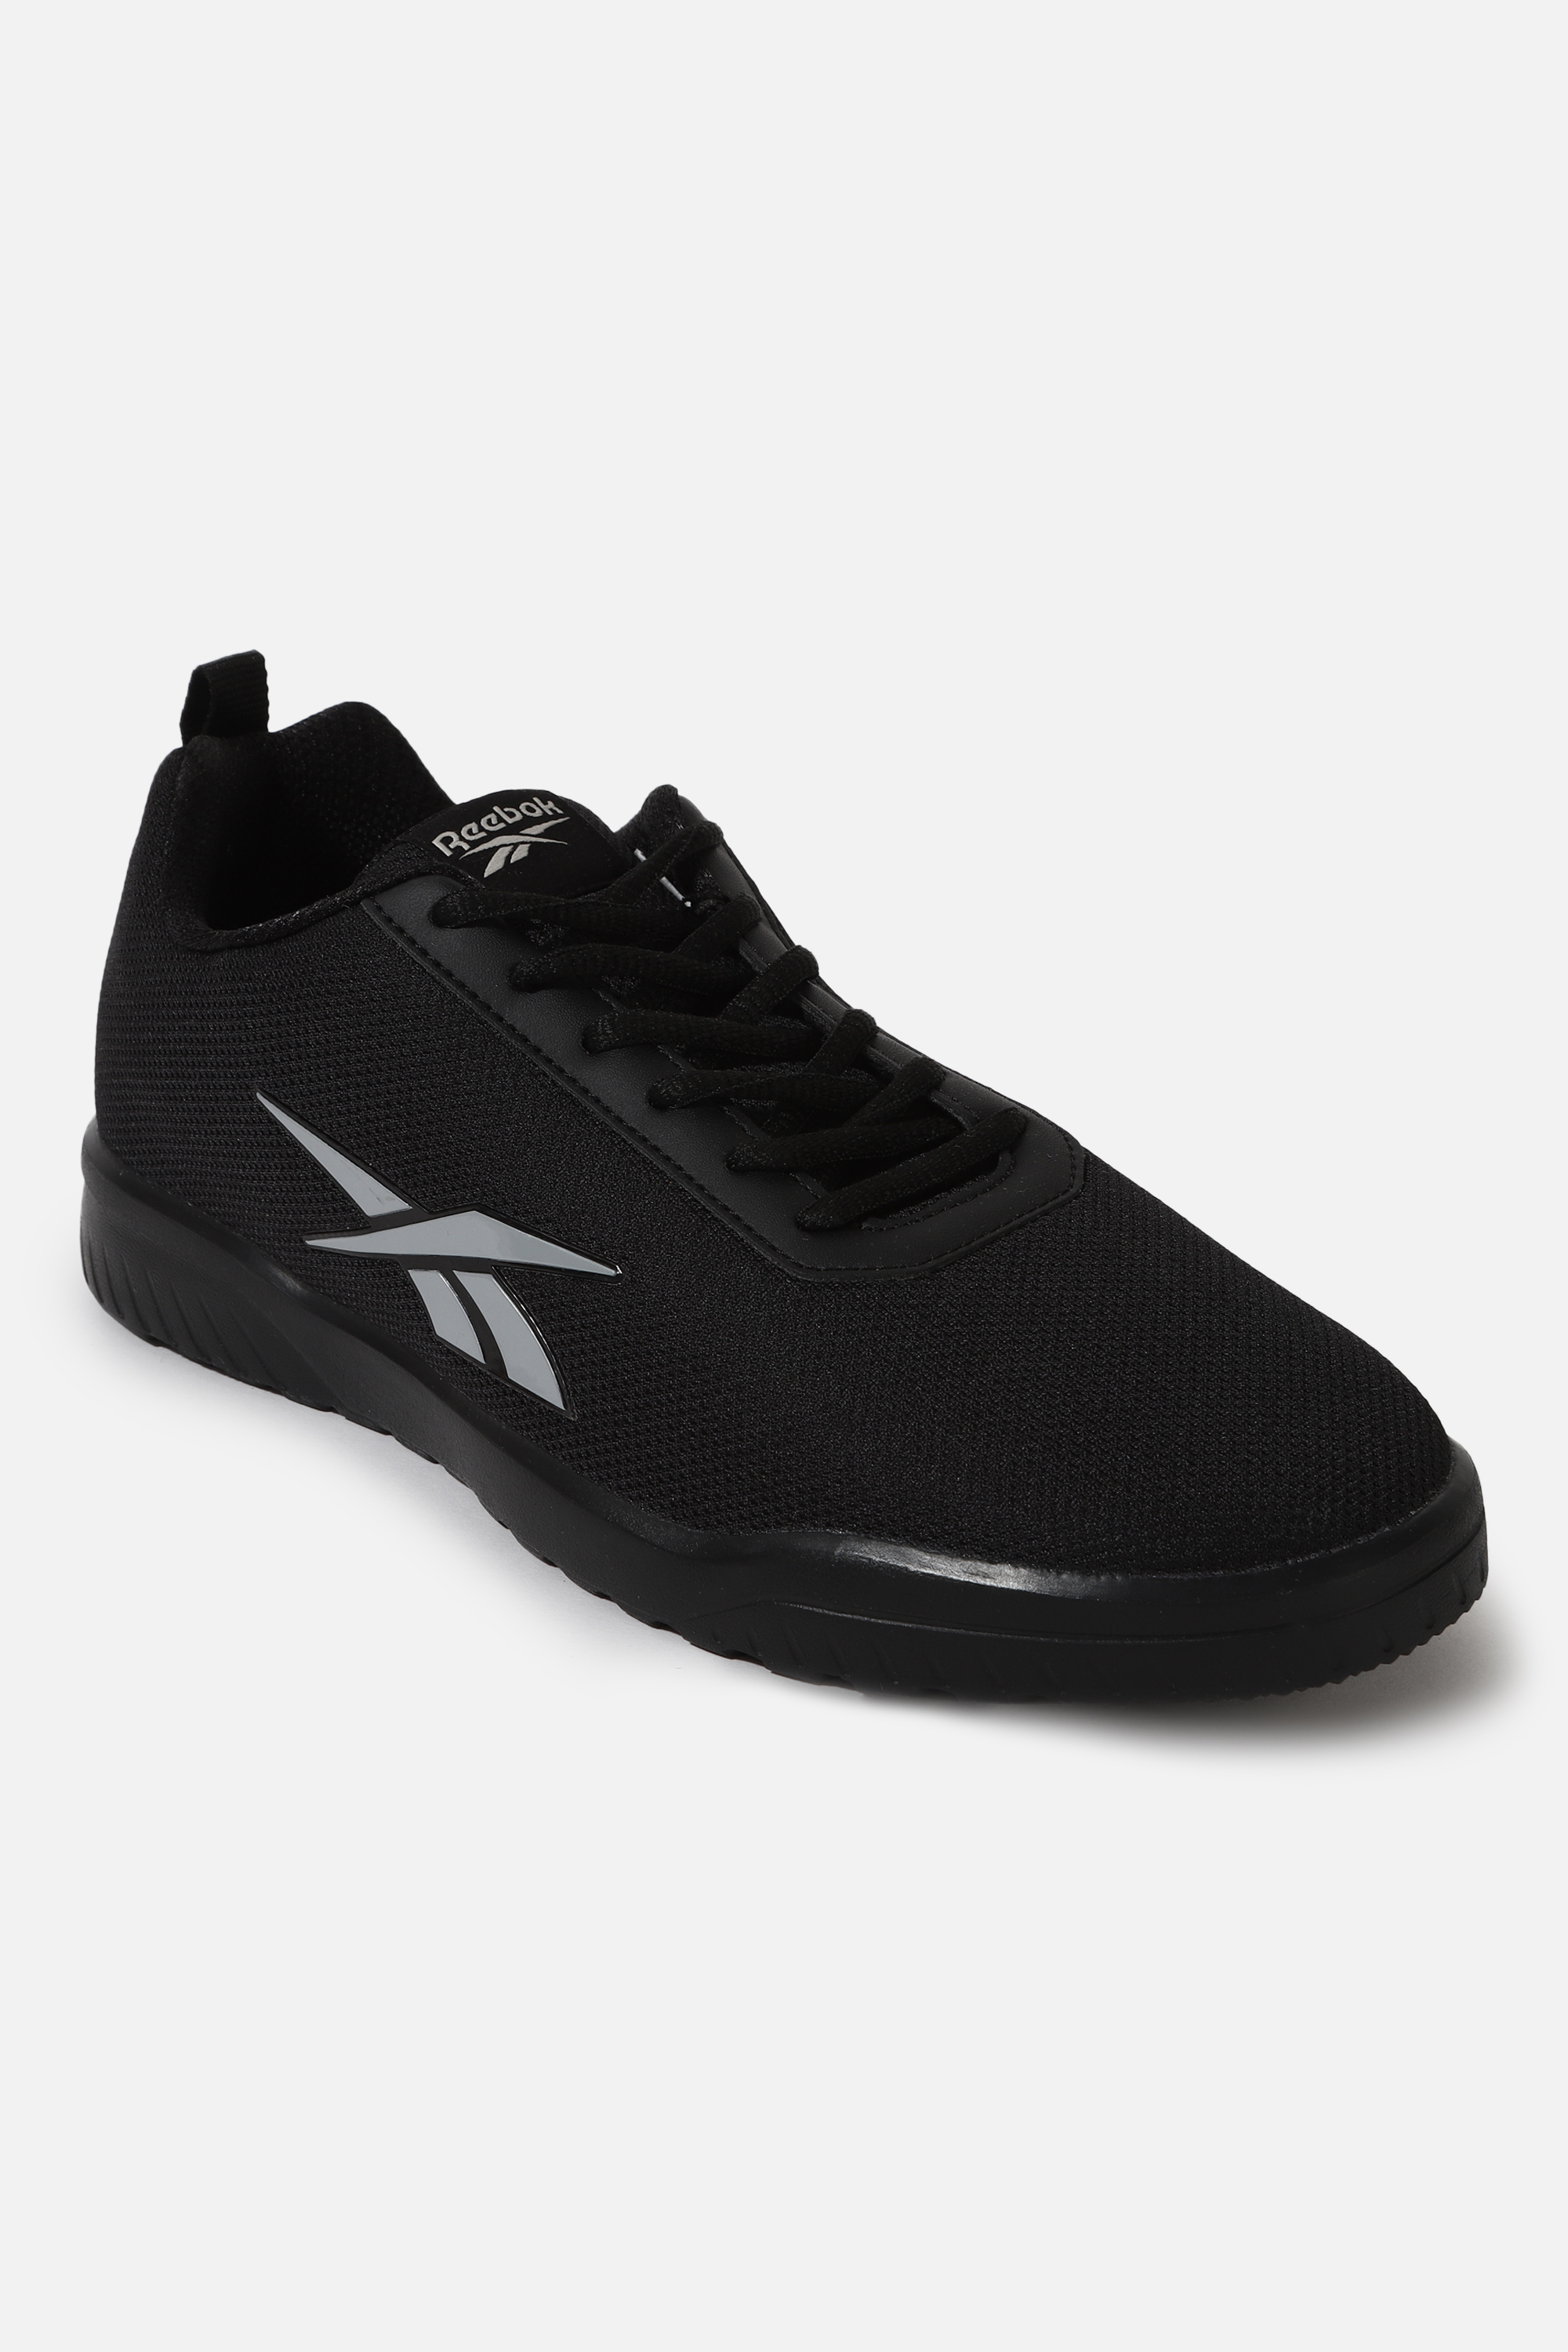 REEBOK Tread Motion Running Shoes For Men (Black)